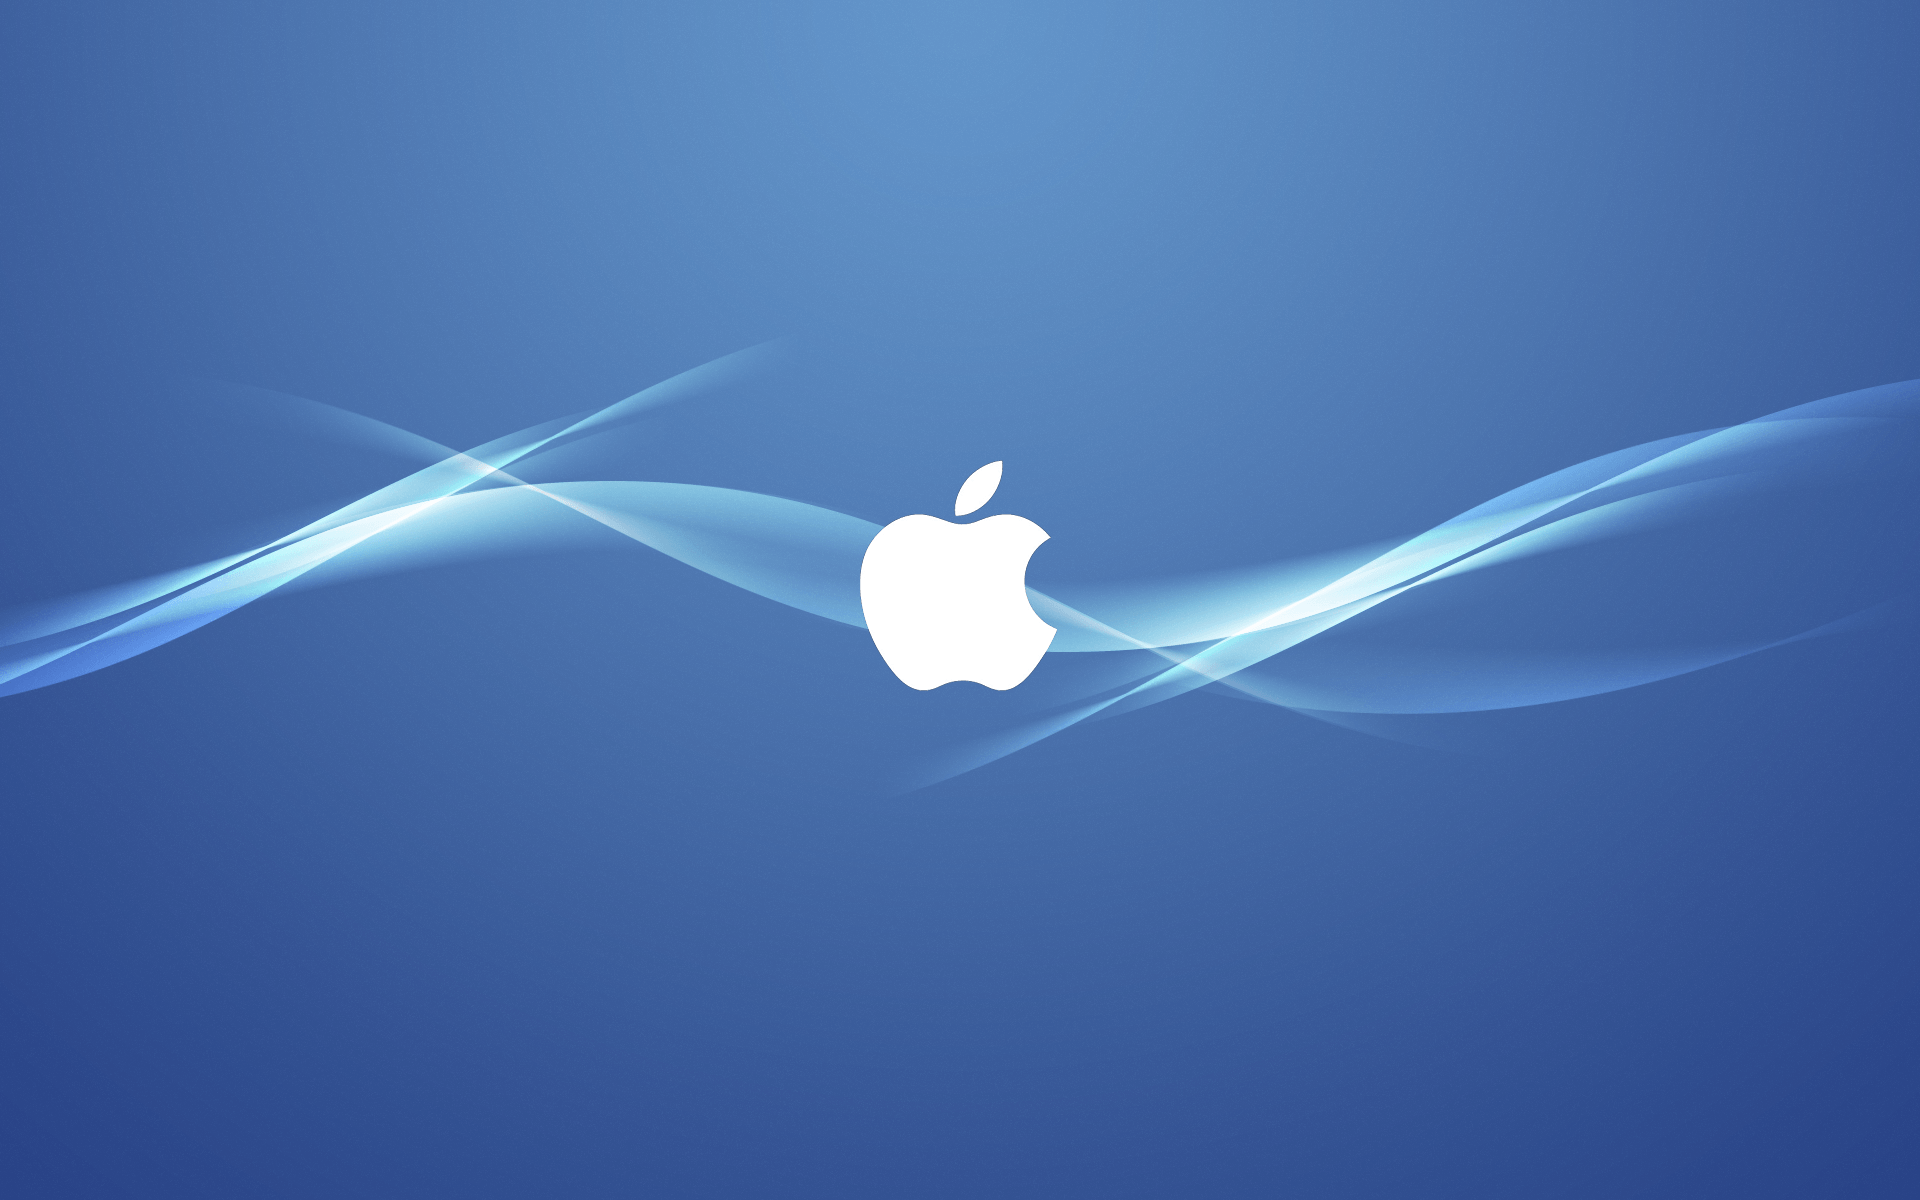 MacBook Air 4K Wallpapers - Top Hình Ảnh Đẹp